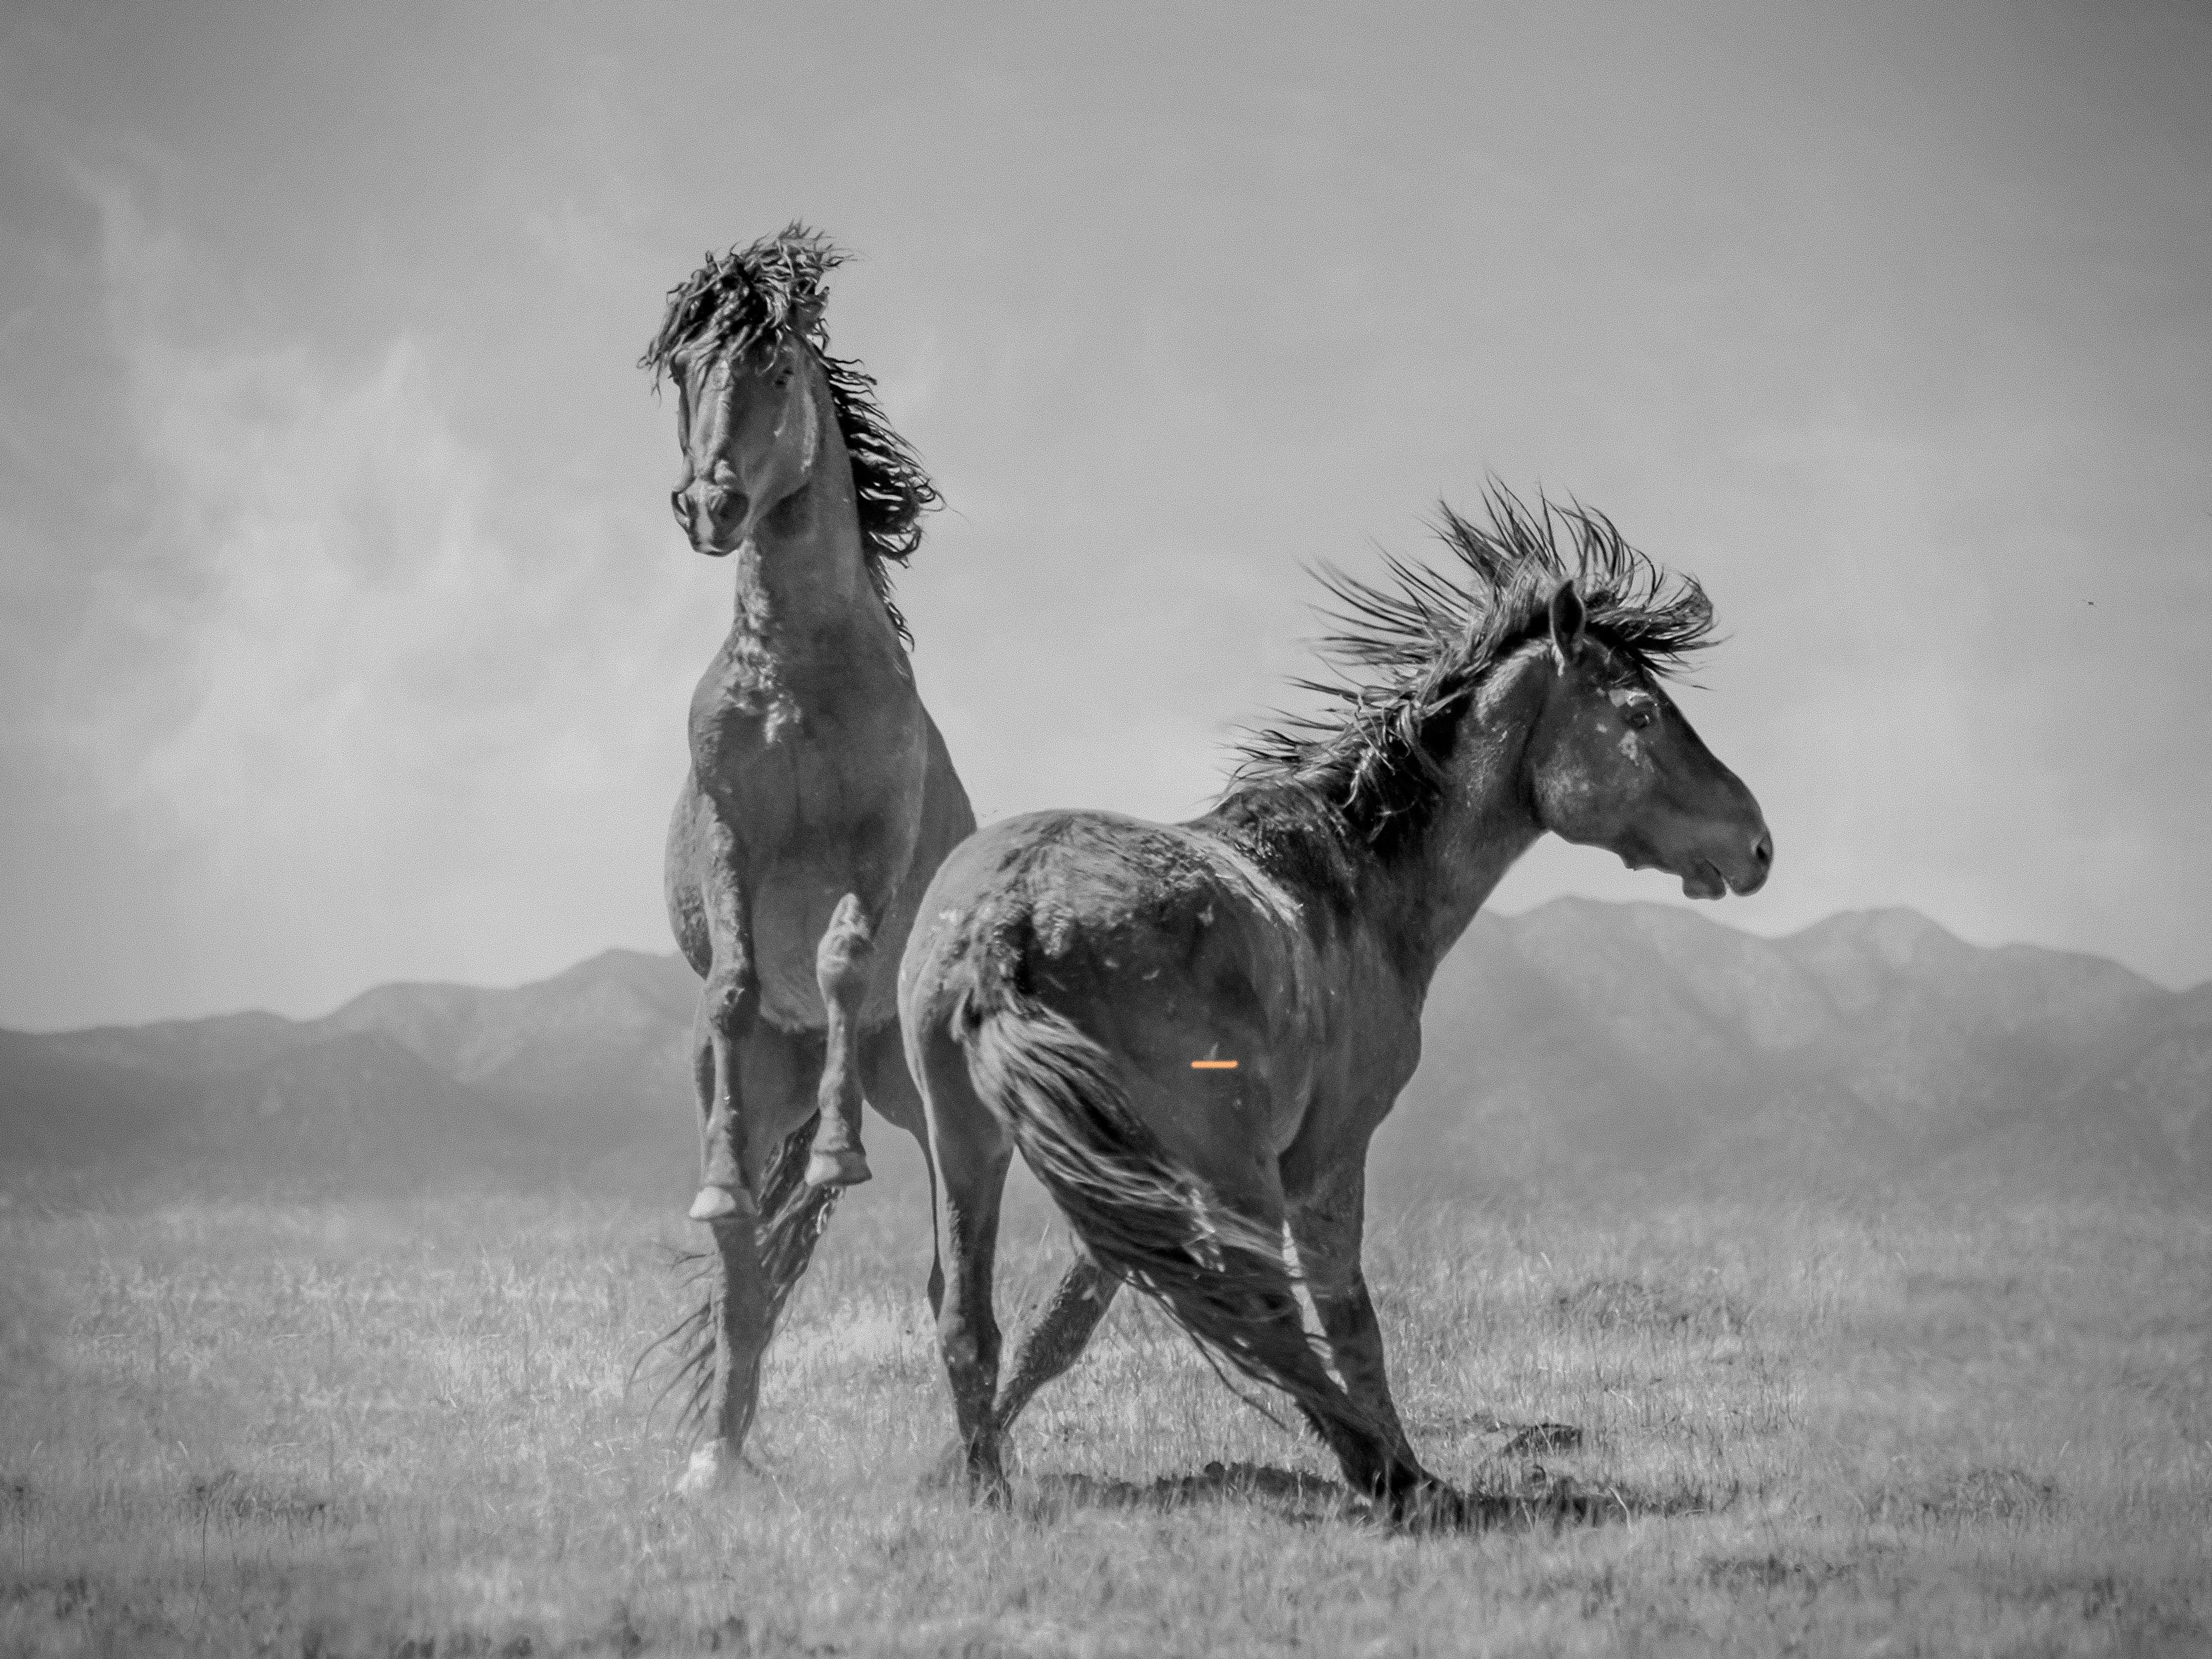 Shane Russeck Animal Print - "Wonder Horses" 36x48 - Black & White Photography, Wild Horses Mustangs Western 